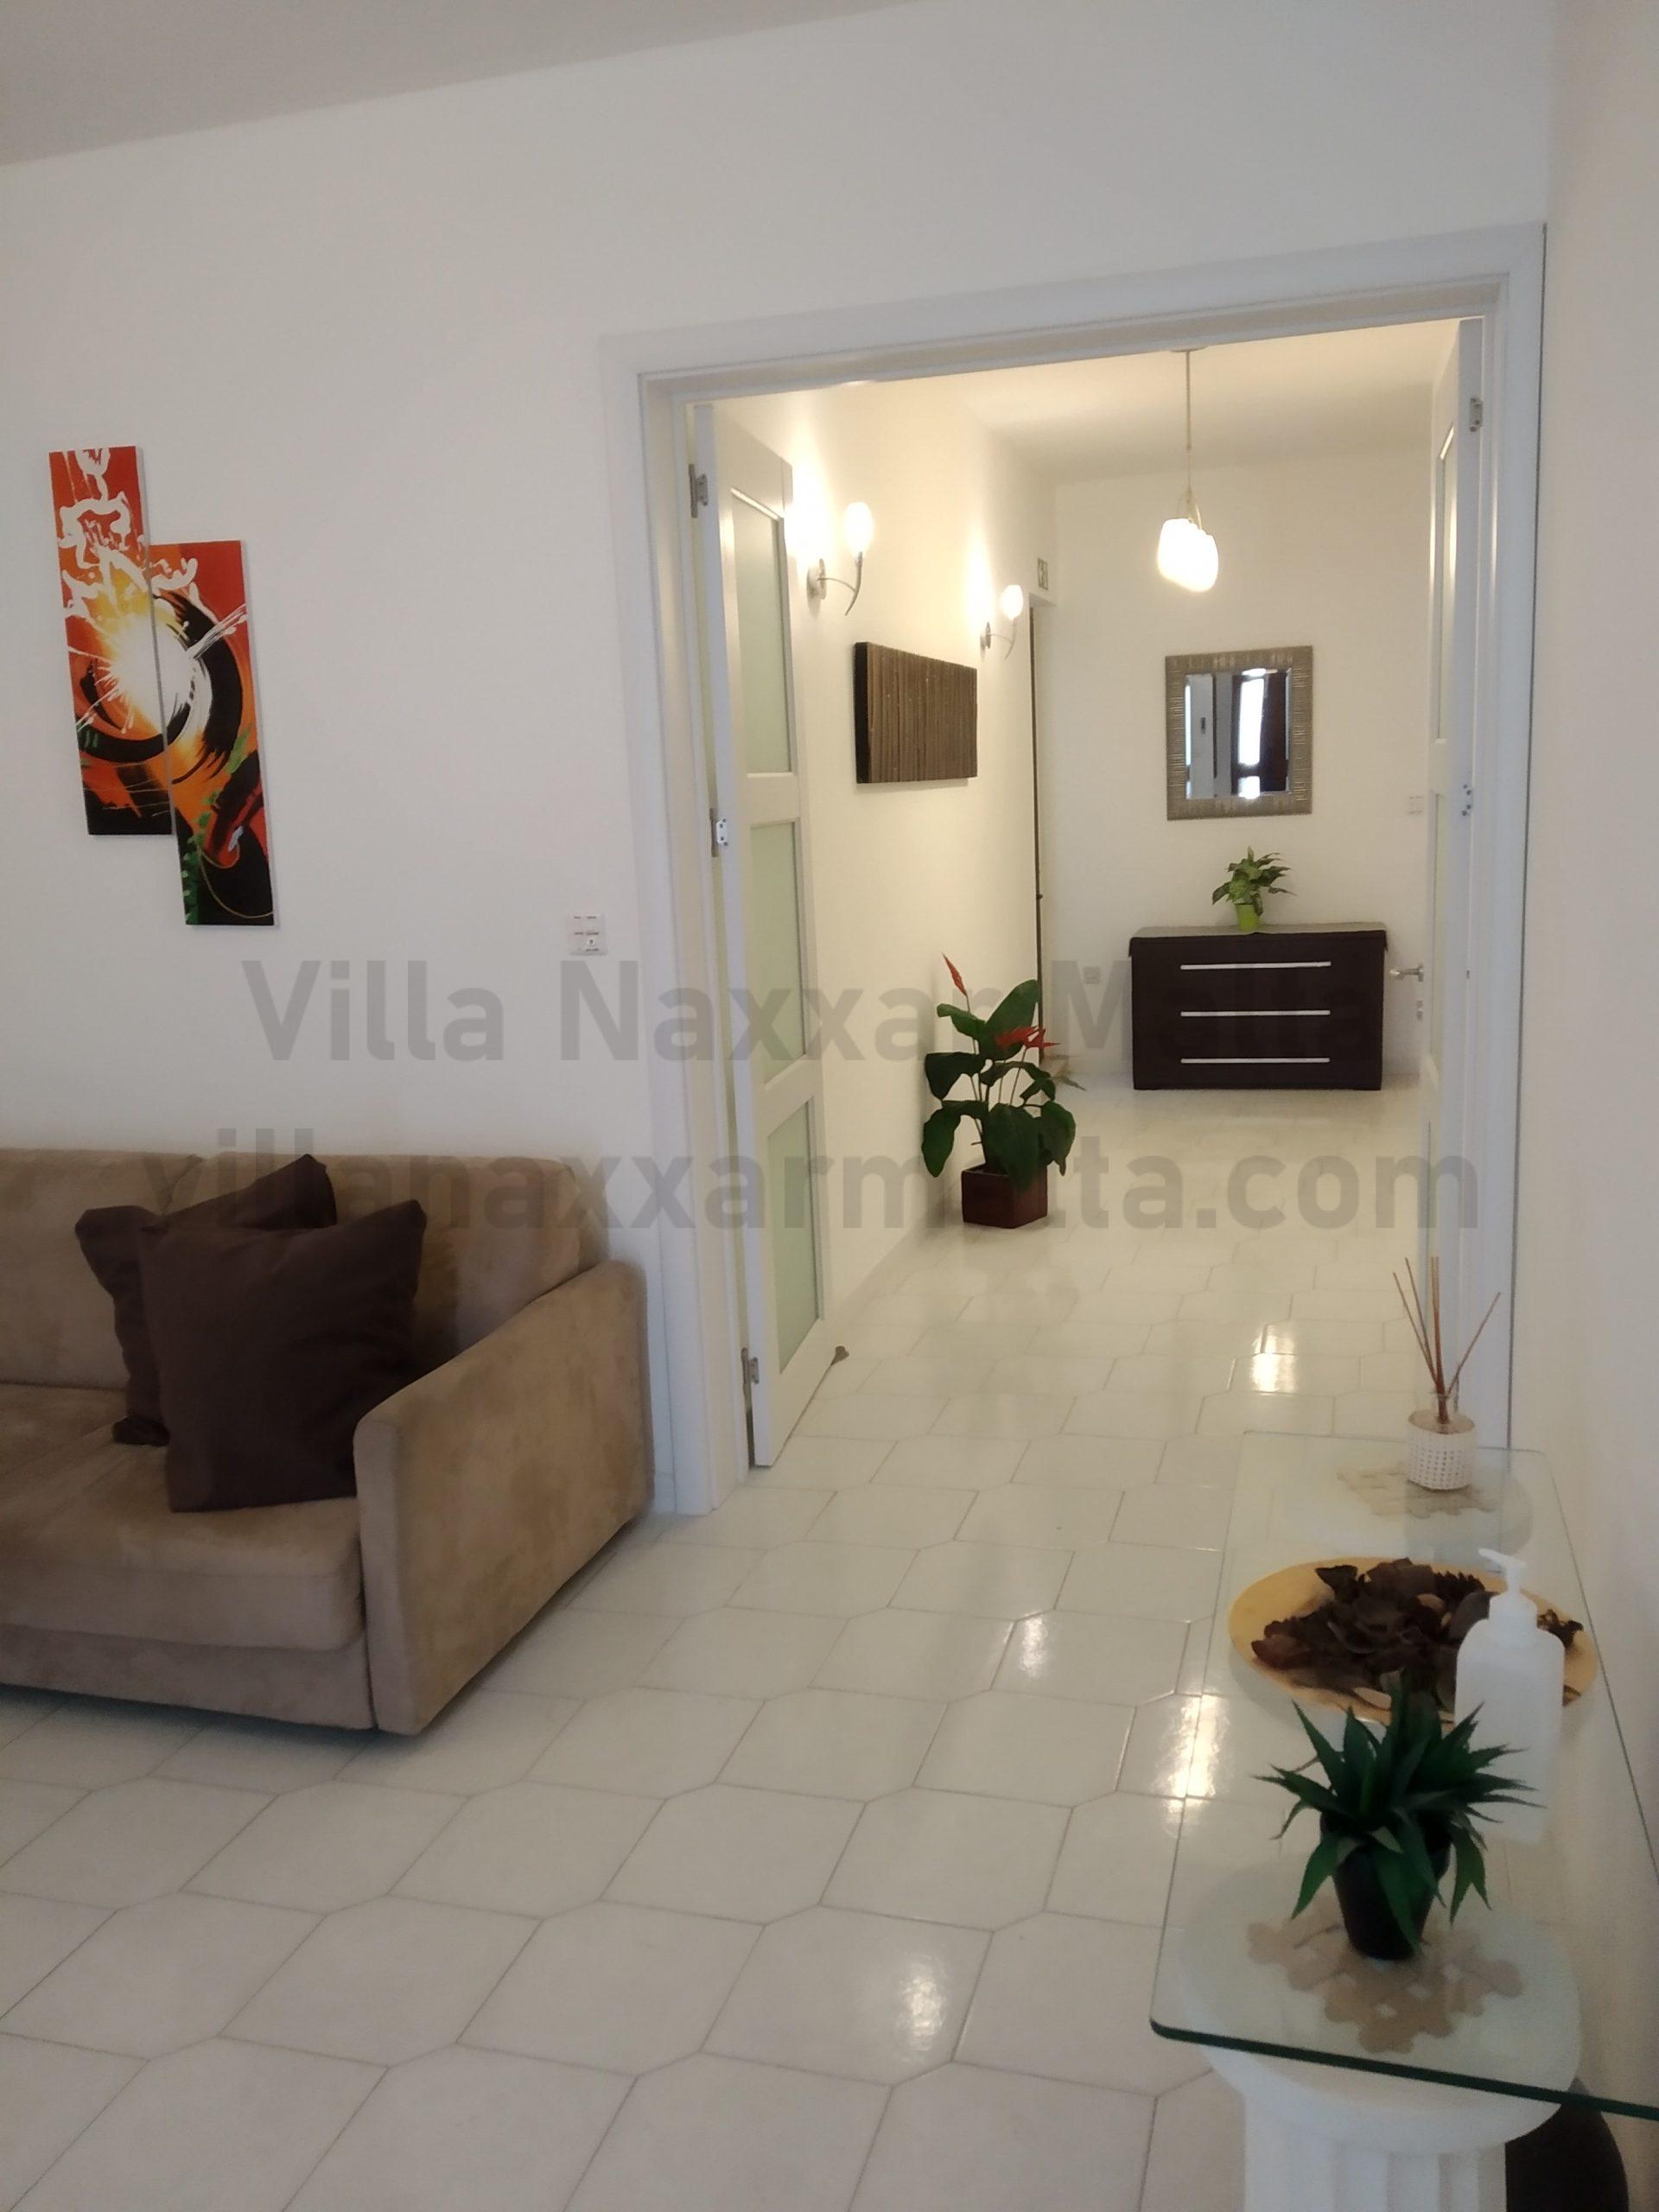 Villa Naxxar Malta – Large Sitting with 3 sofas, AC, TV, WIFI and more